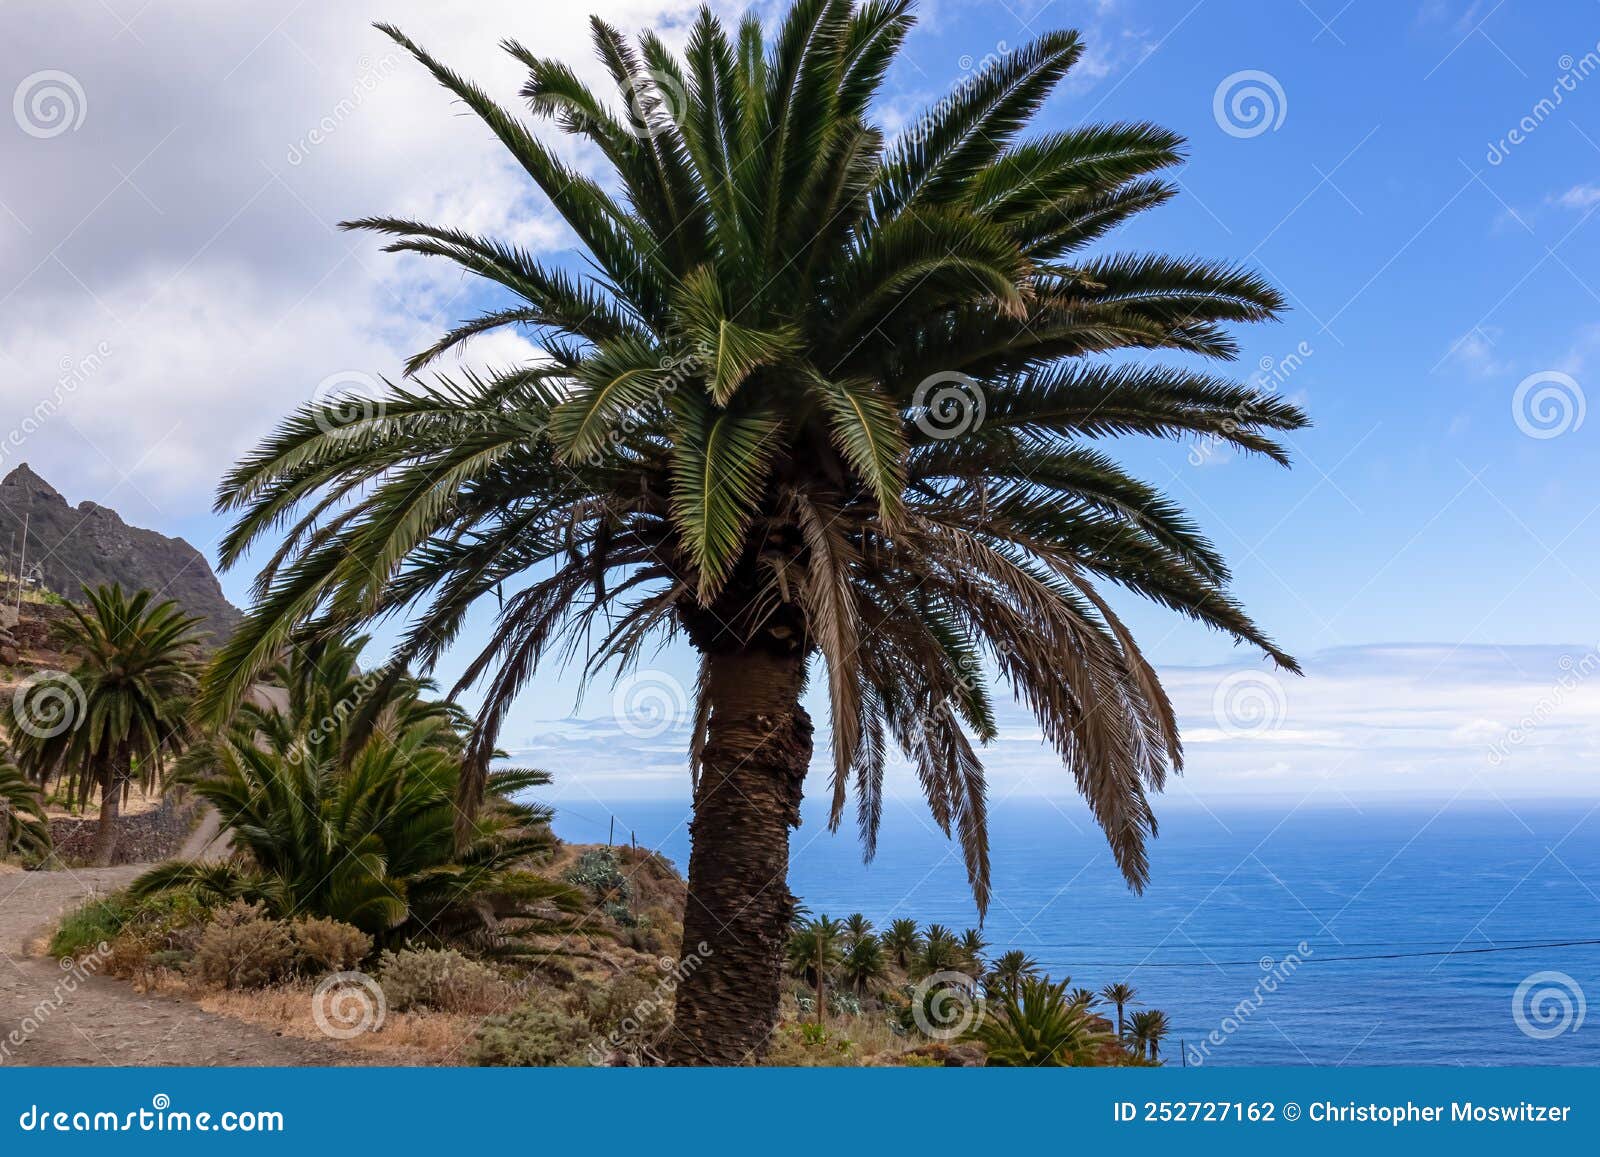 palm trees along the scenic coastal hiking trail in anaga mountain range on tenerife, canary islands, spain, europe